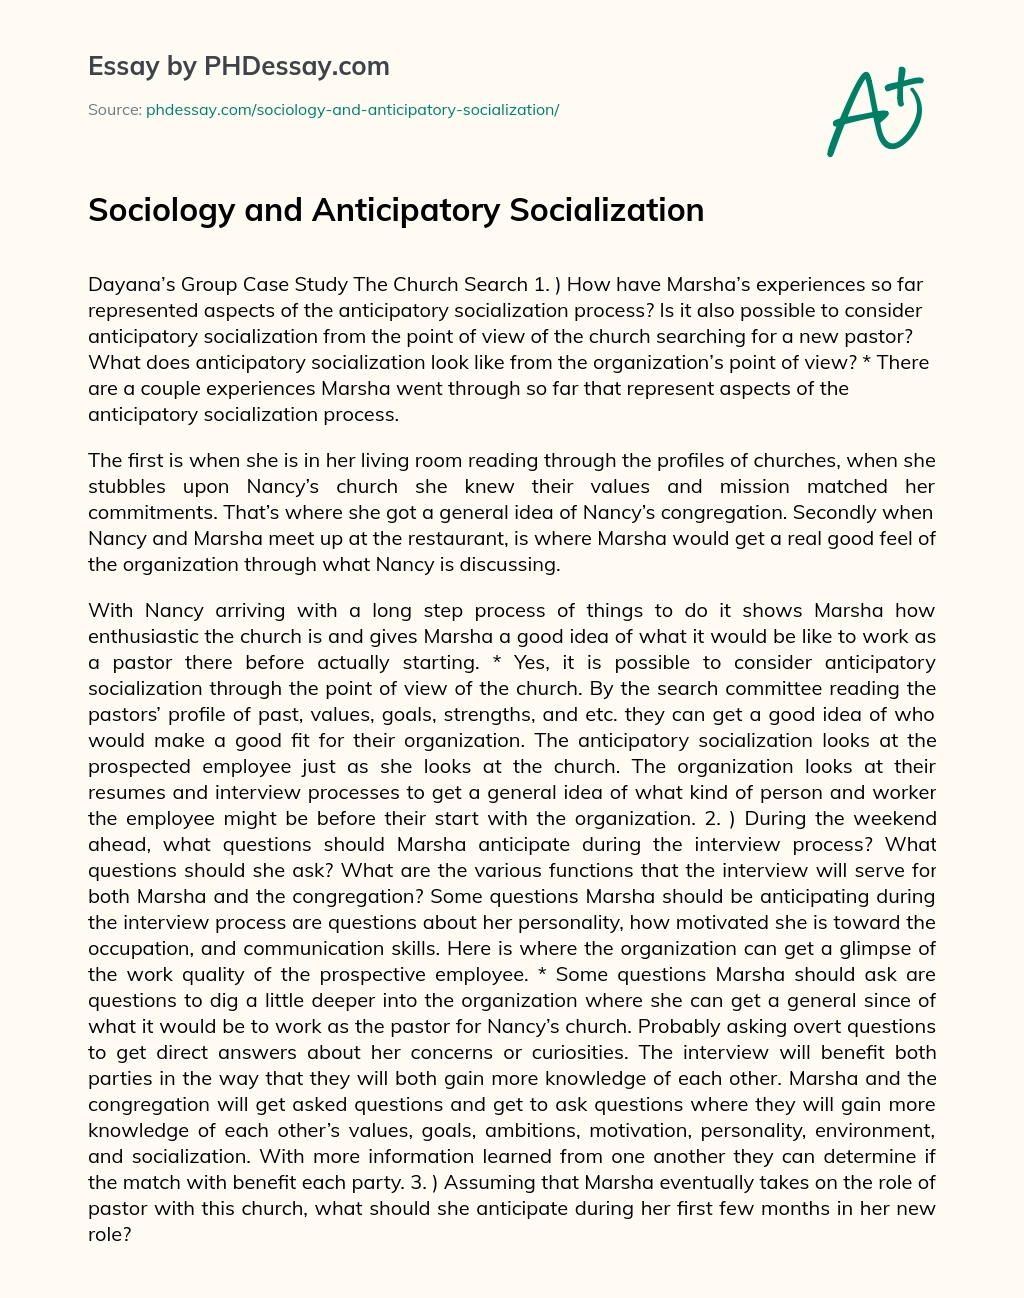 Sociology and Anticipatory Socialization essay